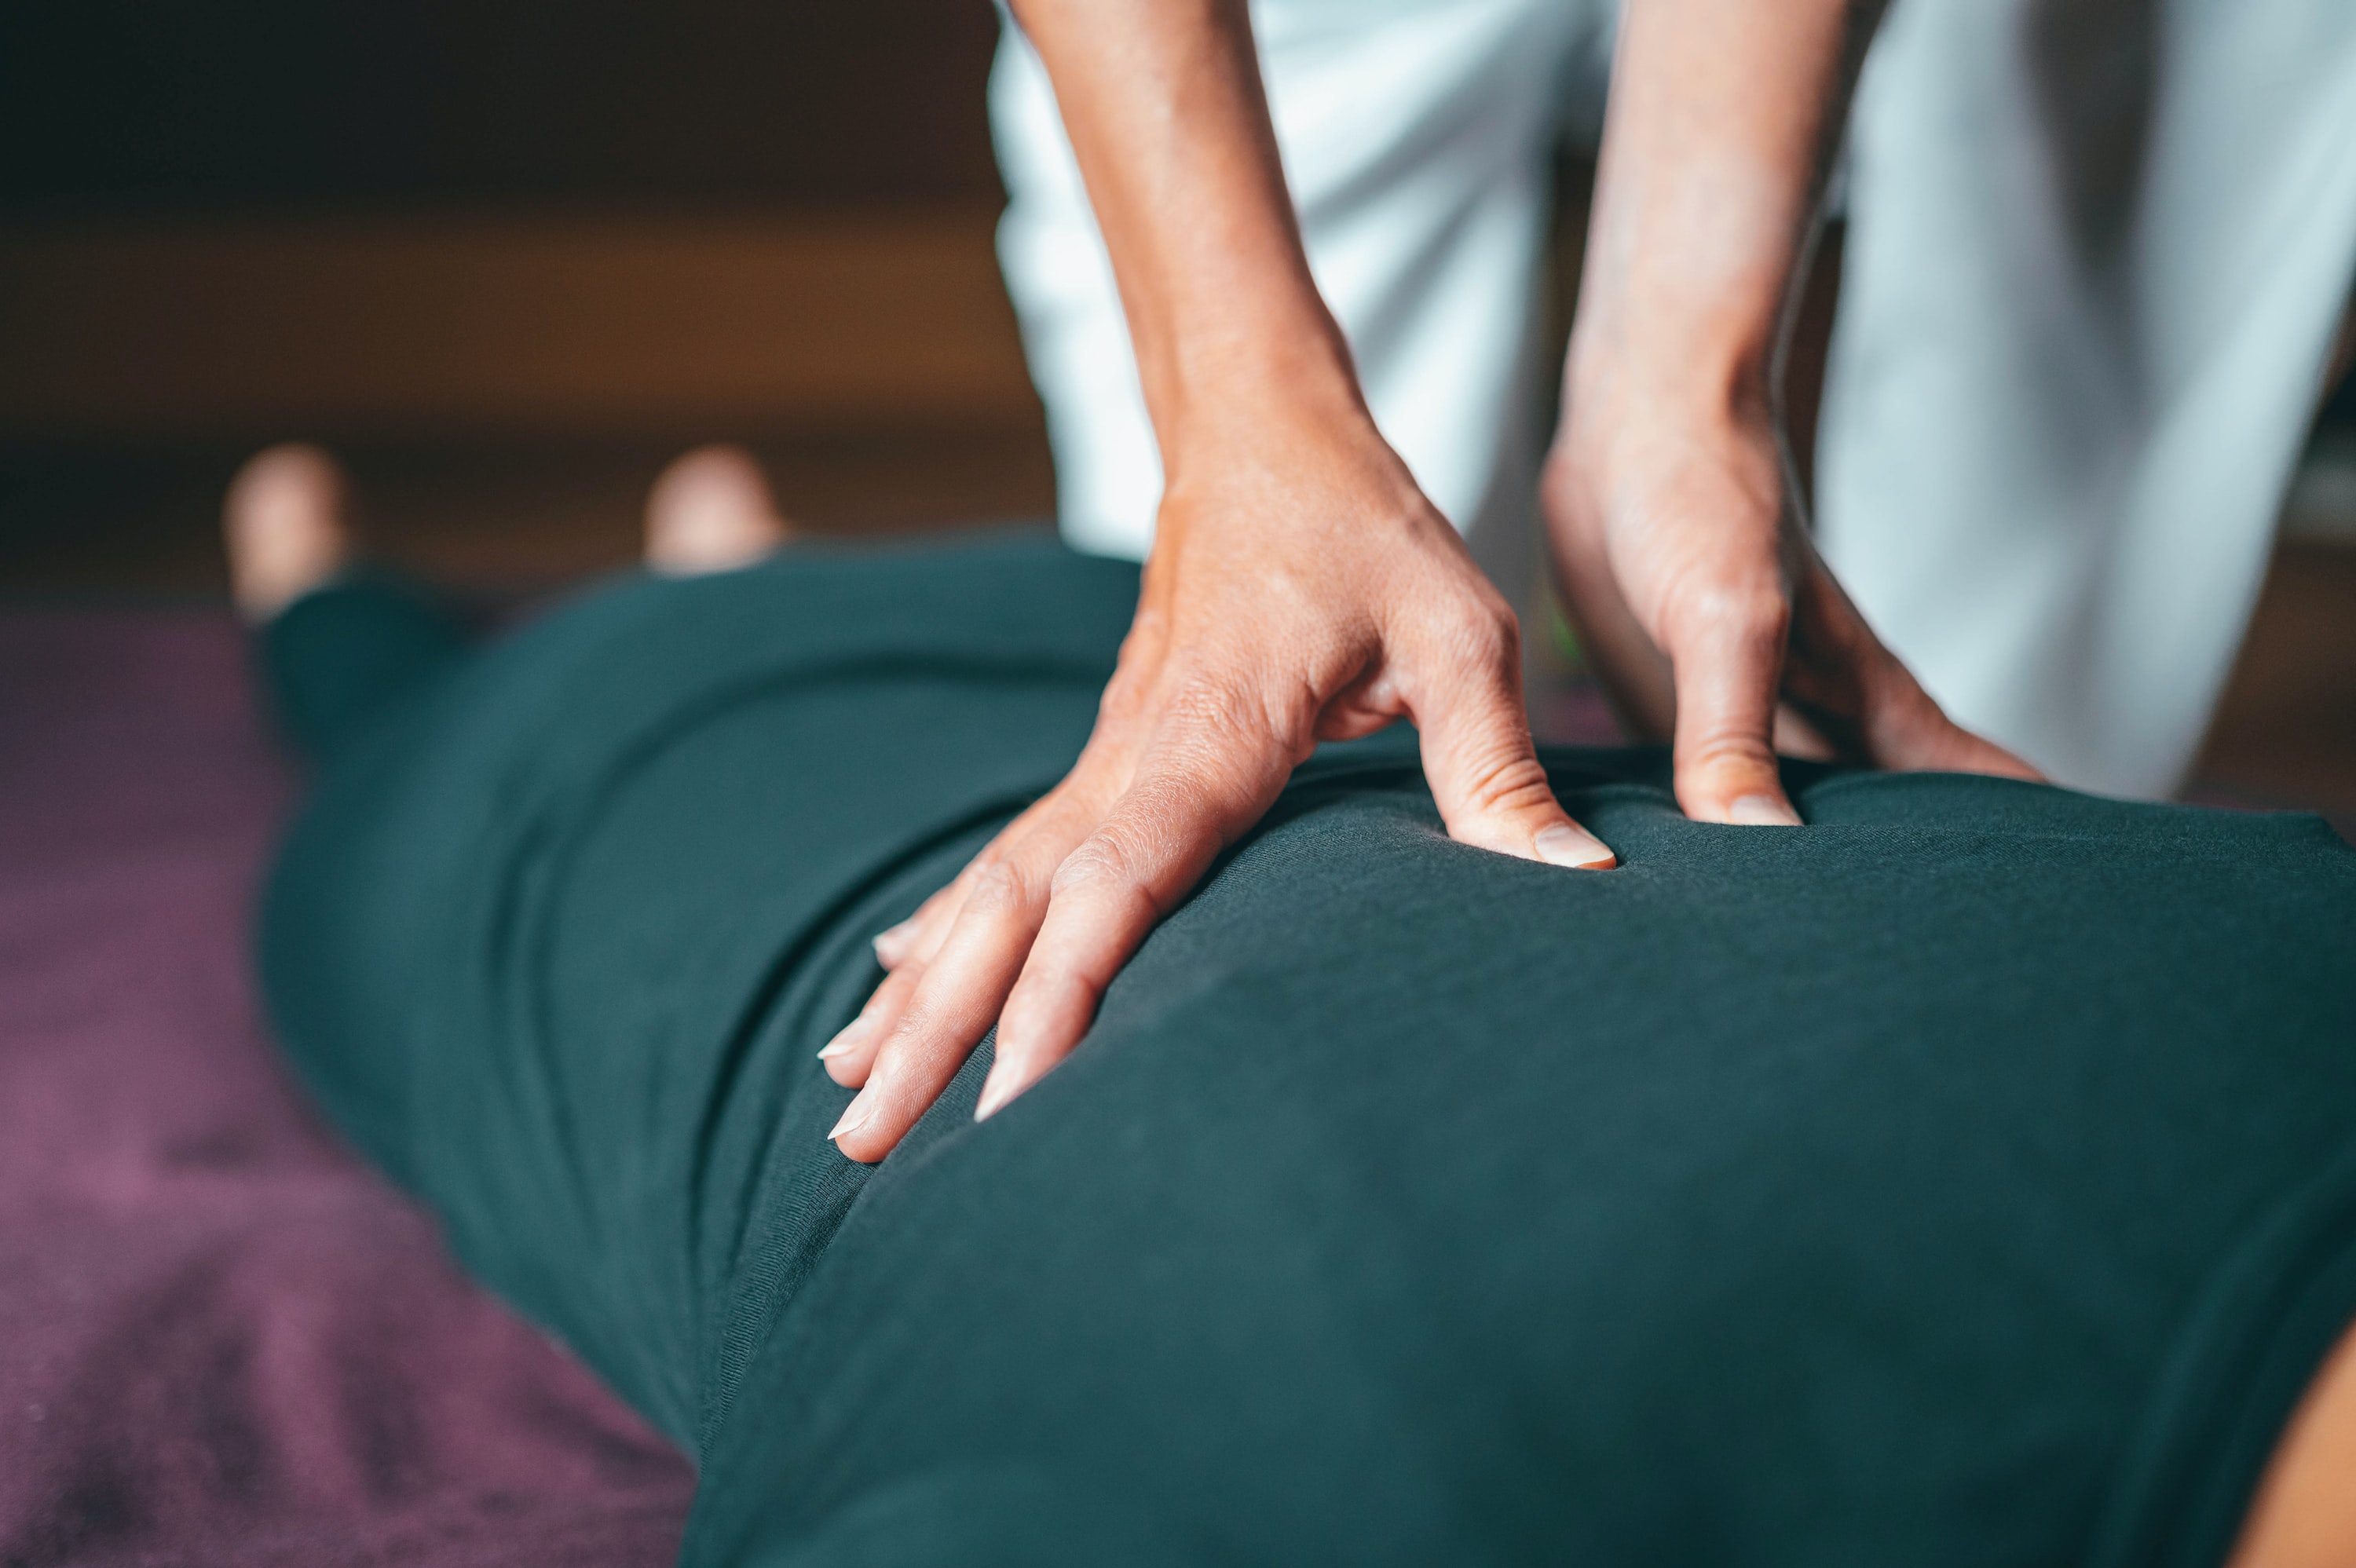 Deep Tissue Massage Find A Provider Near You